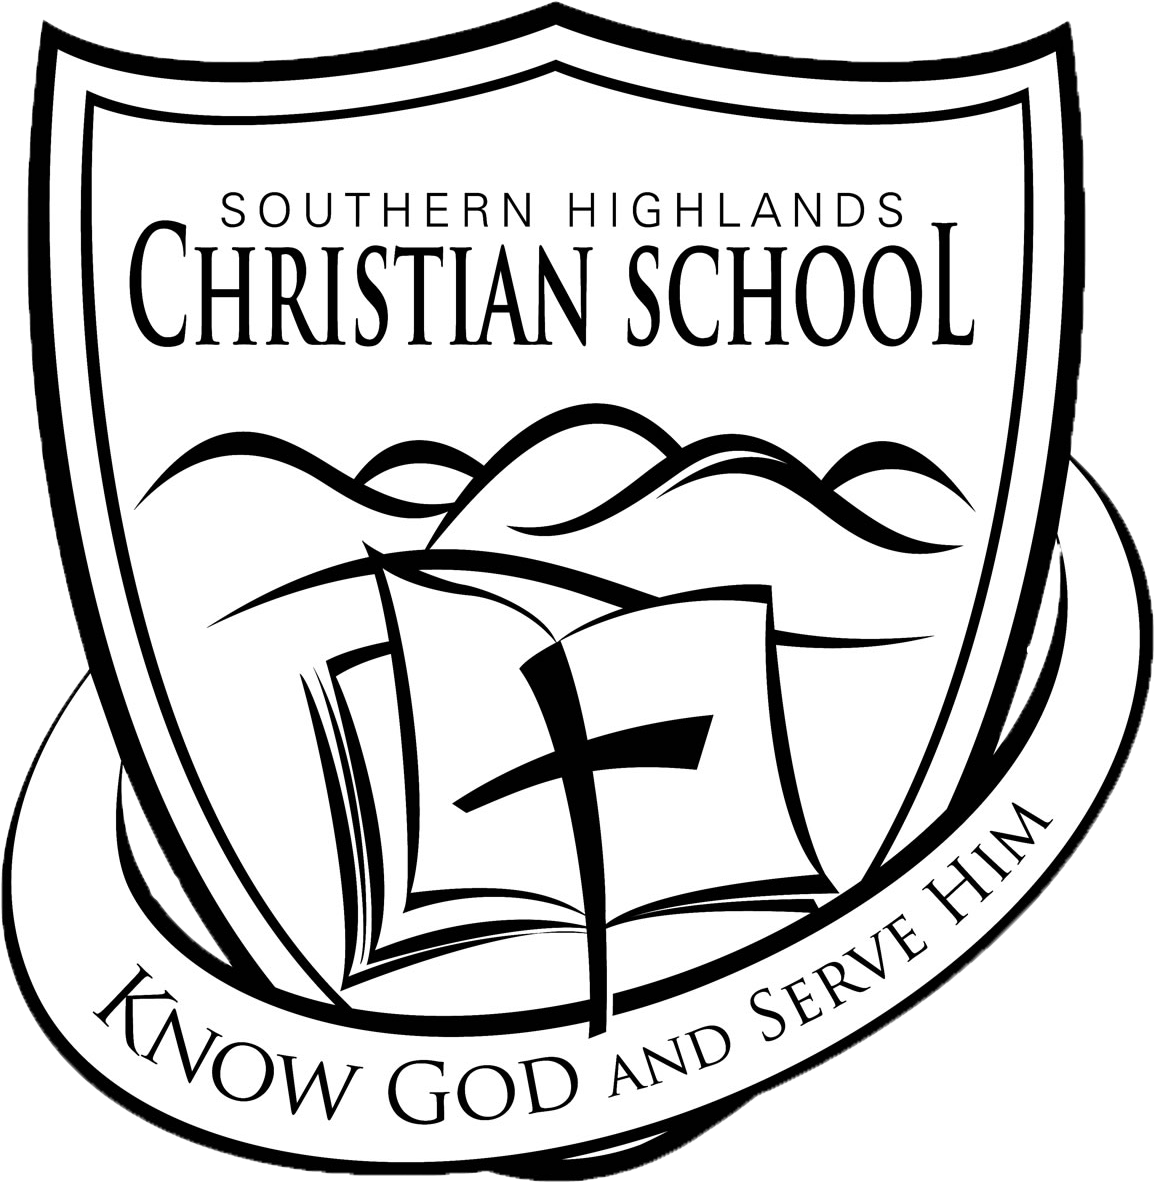 Southern Highlands Christian School - Southern Highlands Christian School (1299x1299)